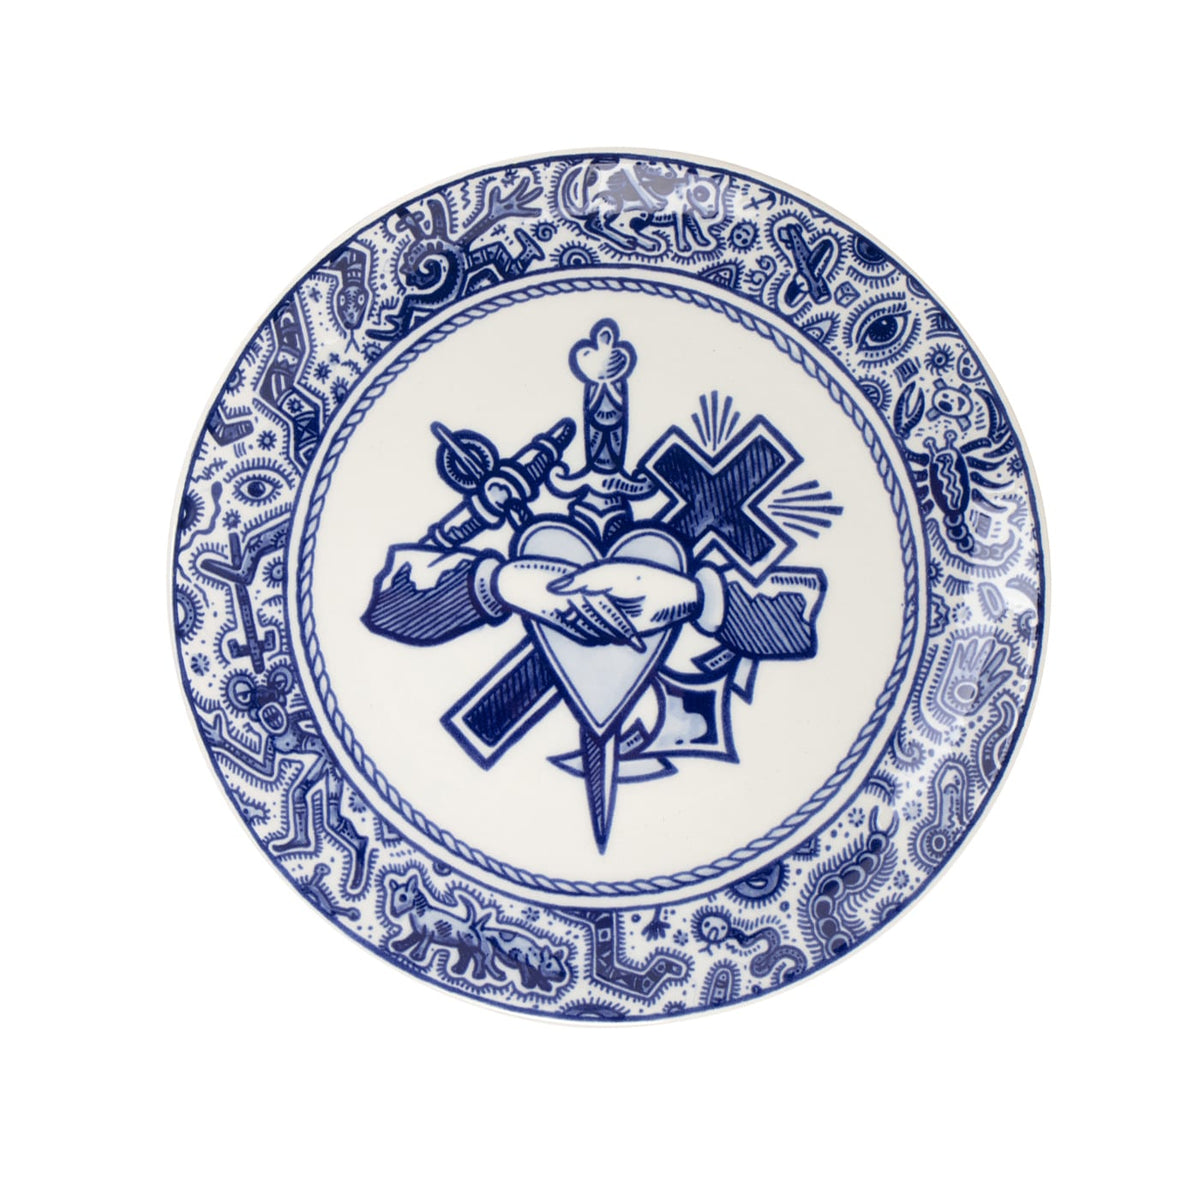 Faith, Hope & Love Plate - Schiffmacher Royal Blue Tattoo by Royal Delft